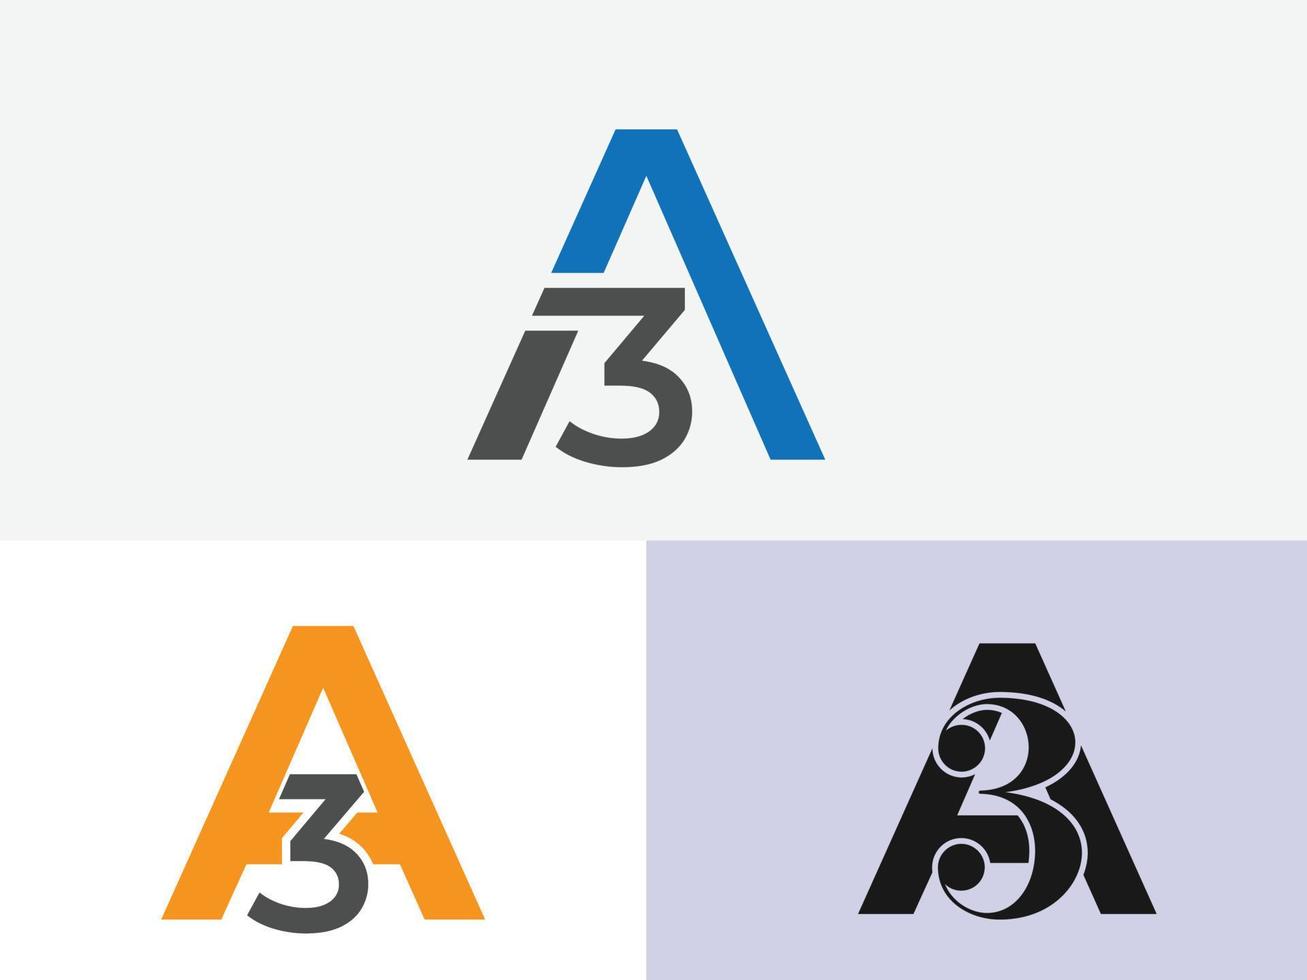 Modern A3 letter and number logo design. A letter. 3number logo. numbering design vector